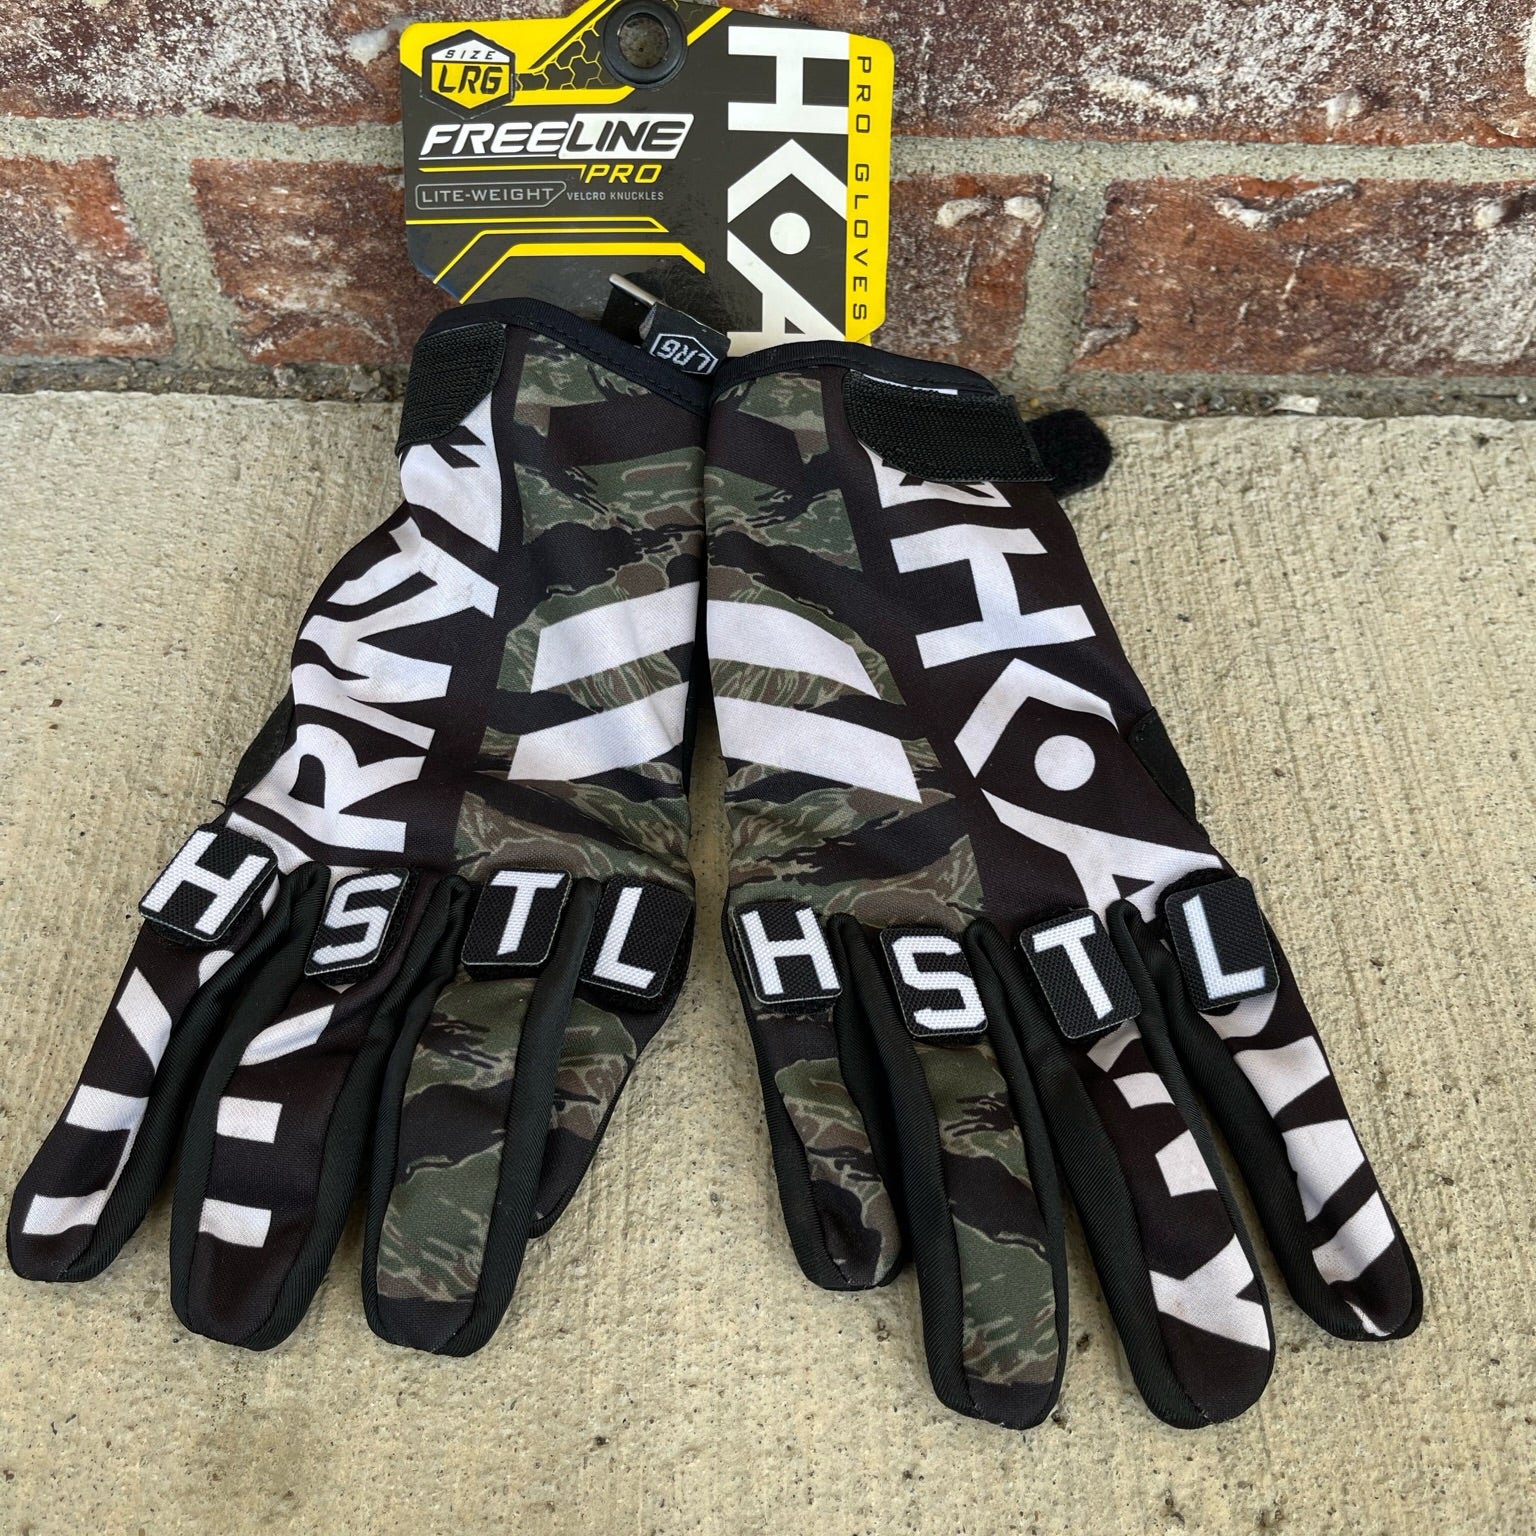 Used HK Army Knucklez Paintball Gloves - Freeline Tiger Stripe - Large